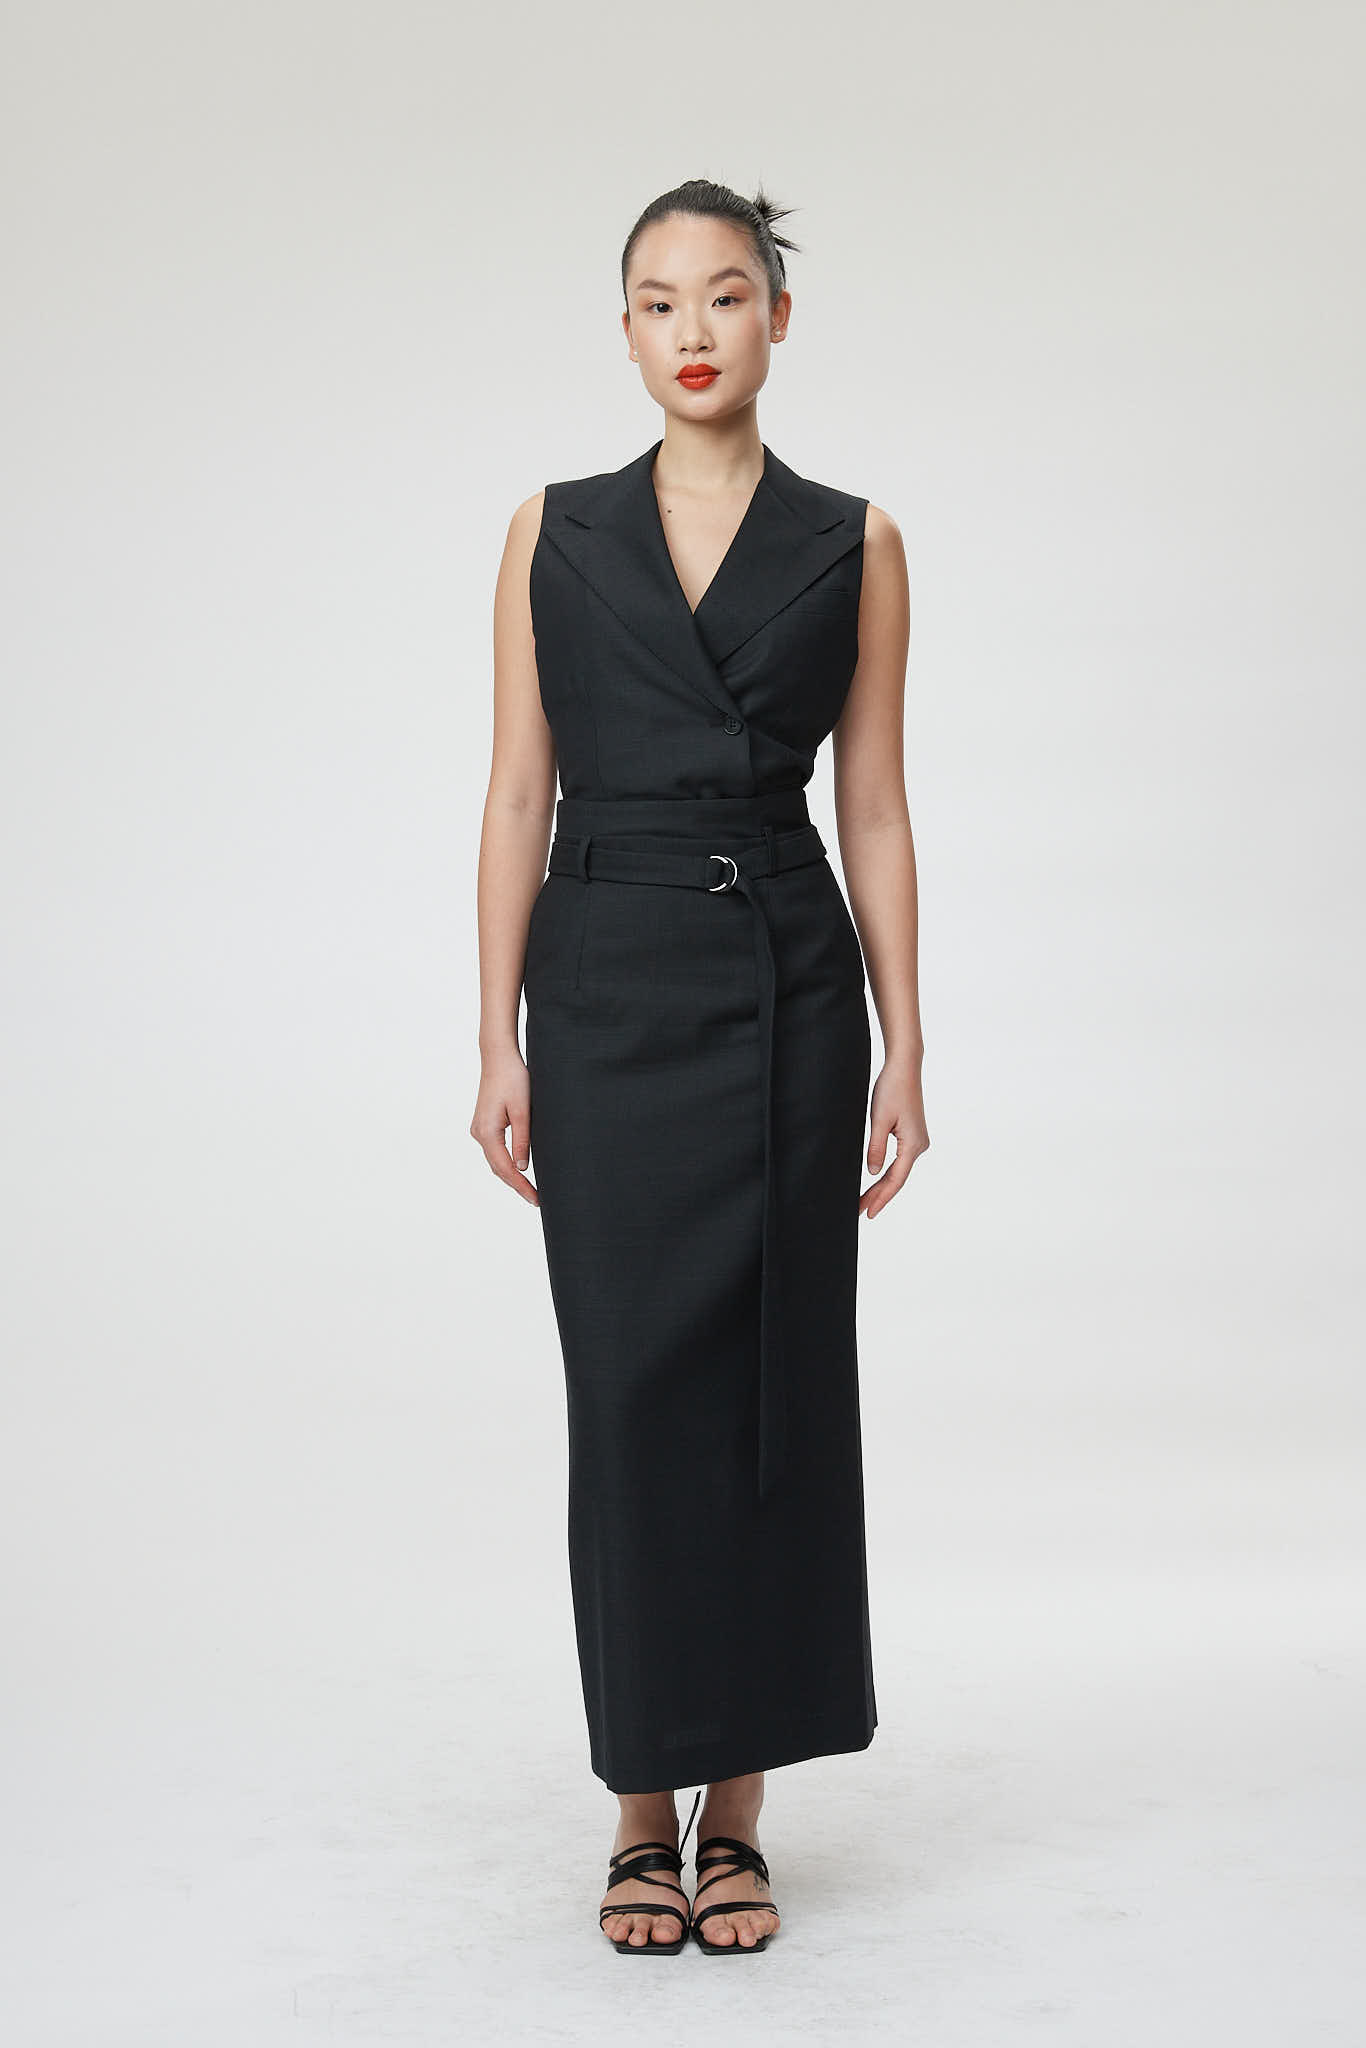 Florence Skirt – Maxi pencil skirt in black